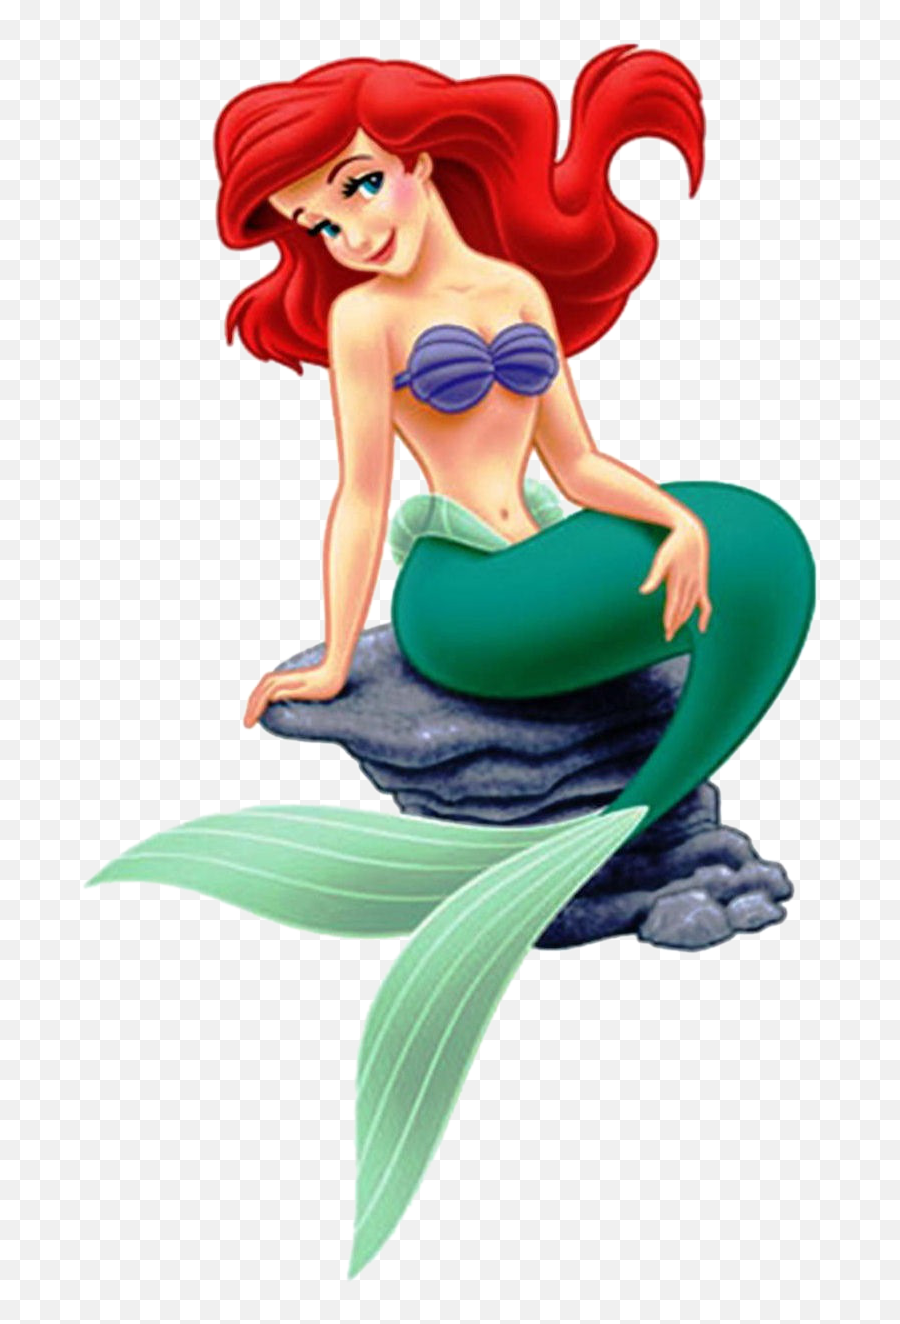 The Little Mermaid Cartoon - Ariel The Little Mermaid Emoji,Little Mermaid Sketches Ariel Emotions